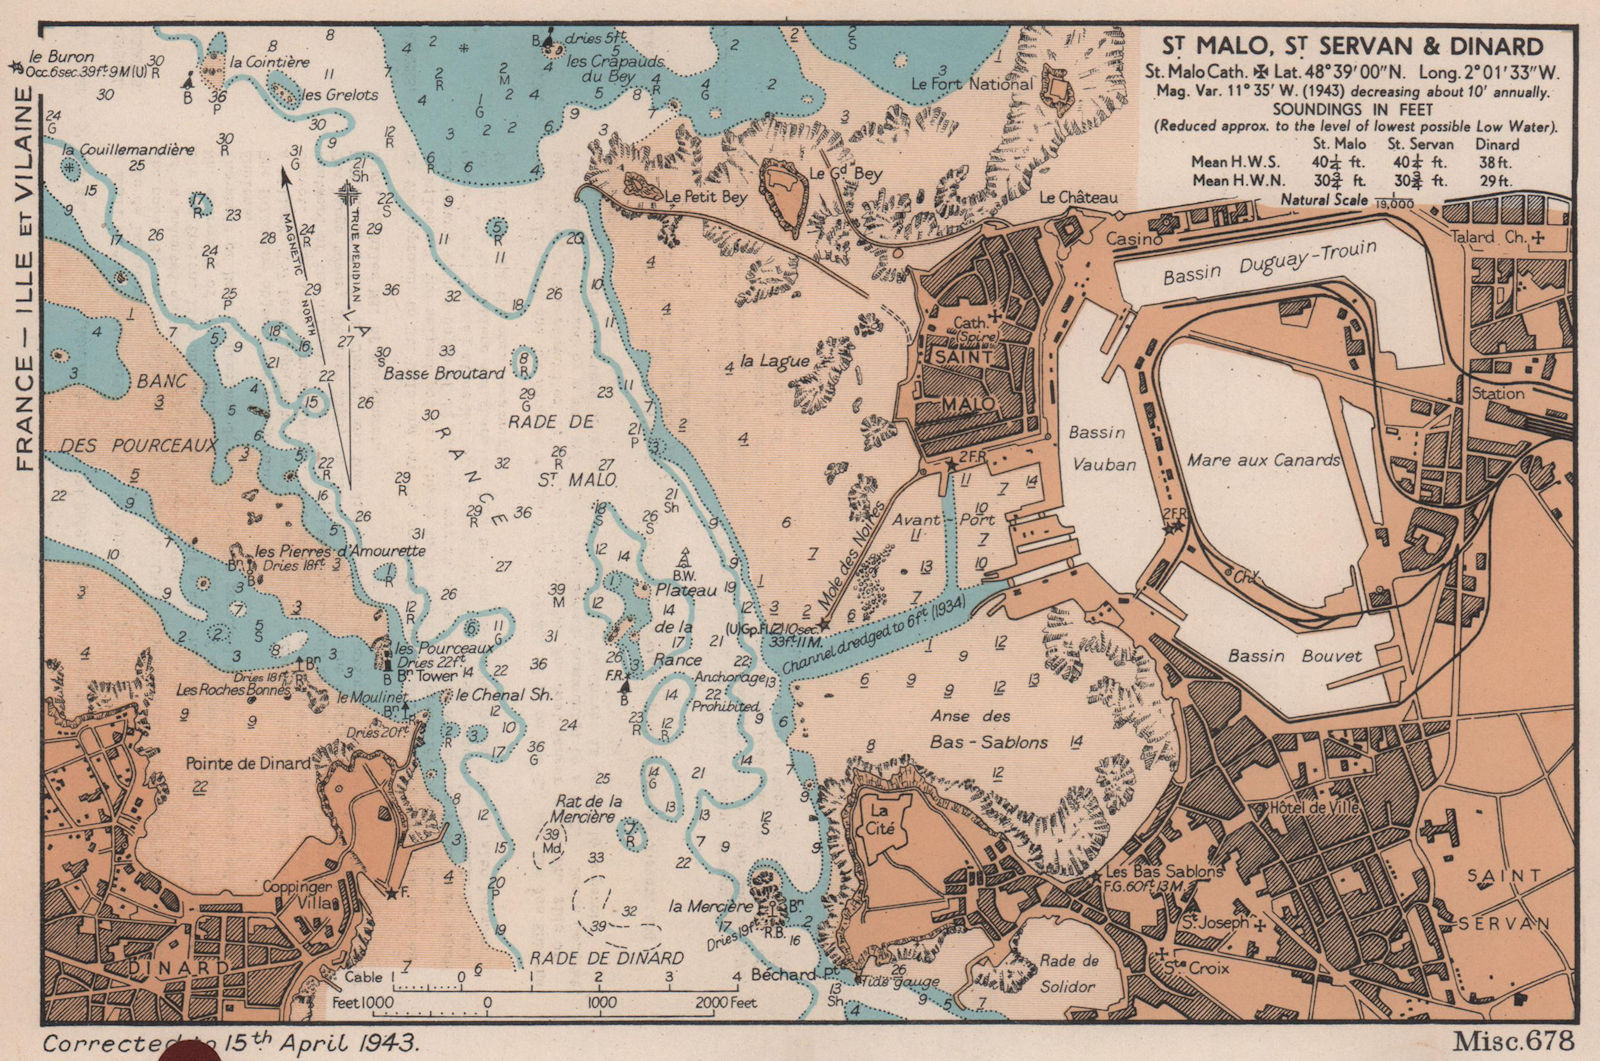 Saint-Malo/Servan & Dinard plan/coast chart. D-Day planning map. ADMIRALTY 1943